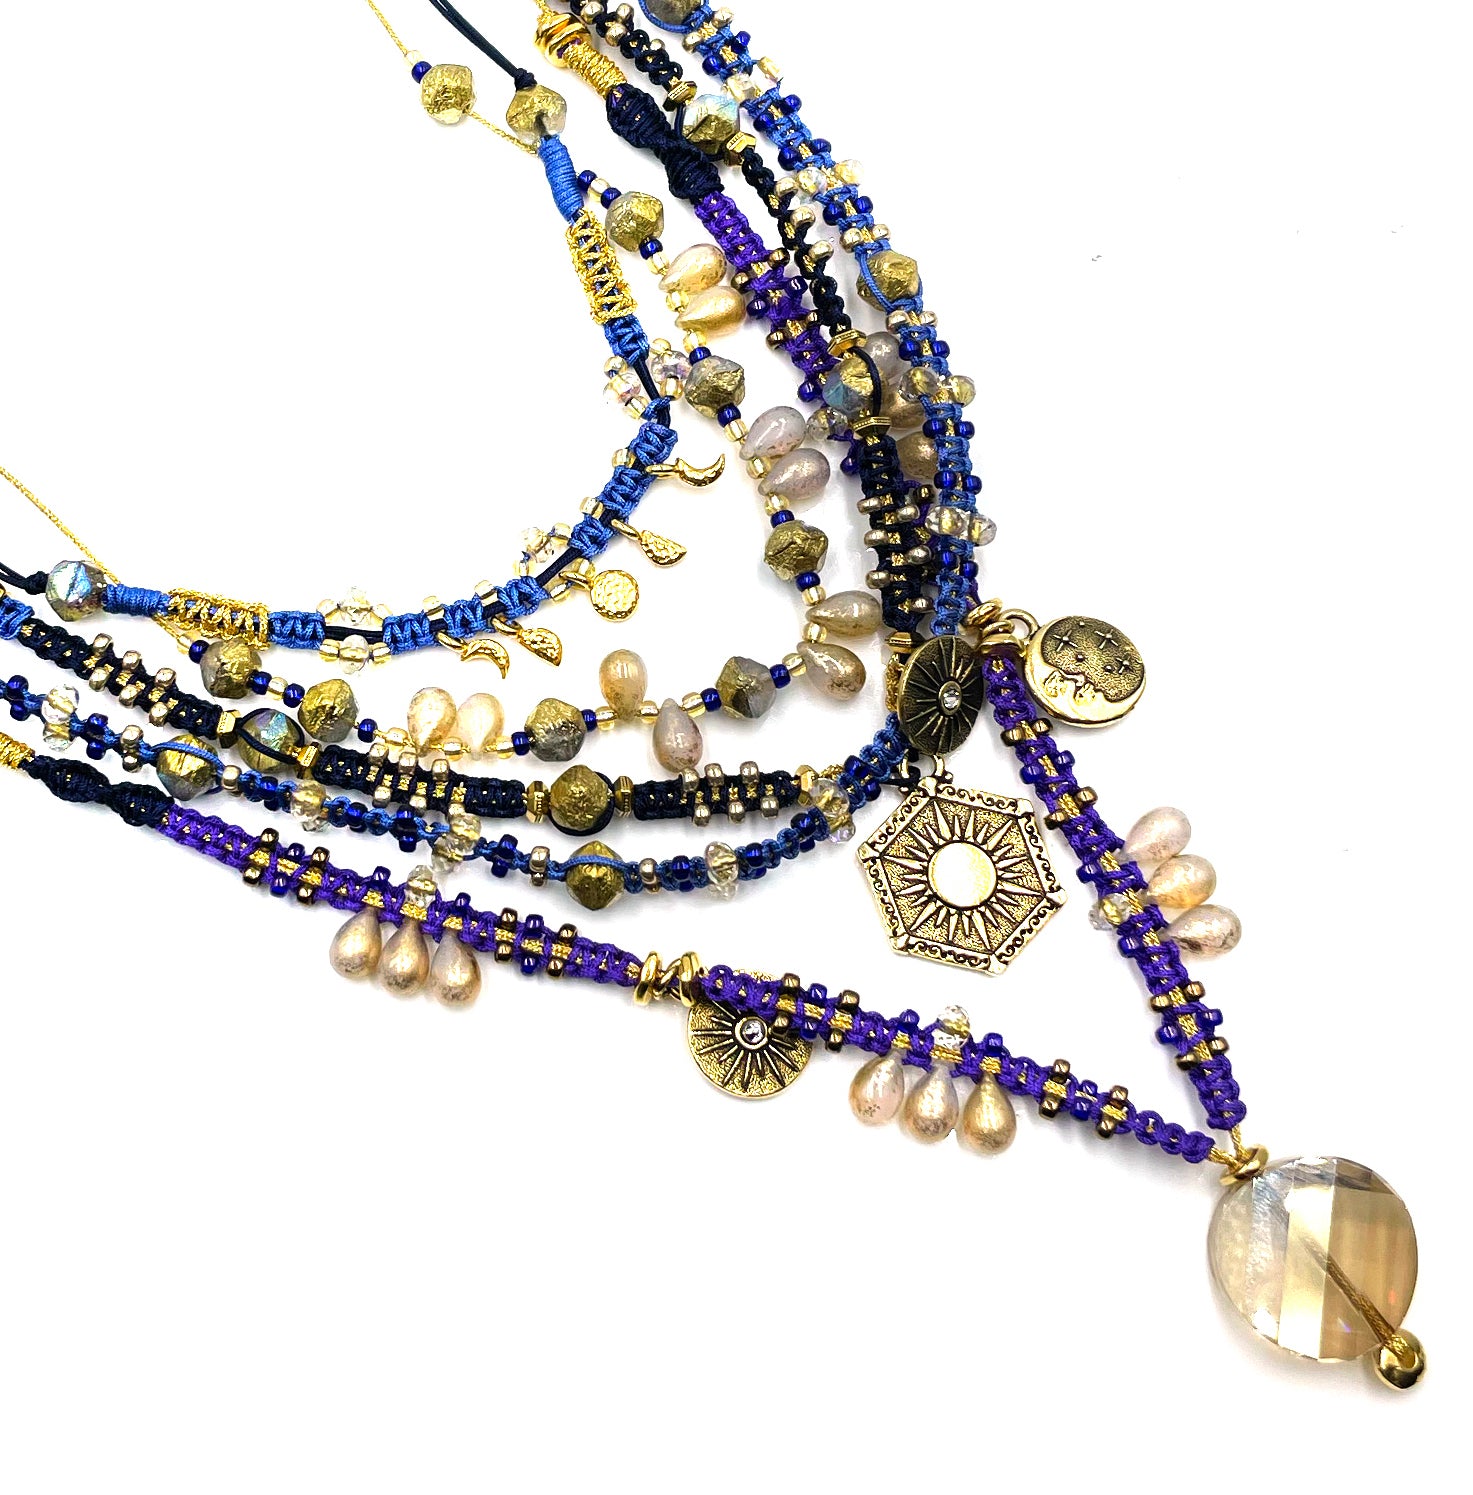 Macramé Necklaces with Celestial Collection <br>9.15.21